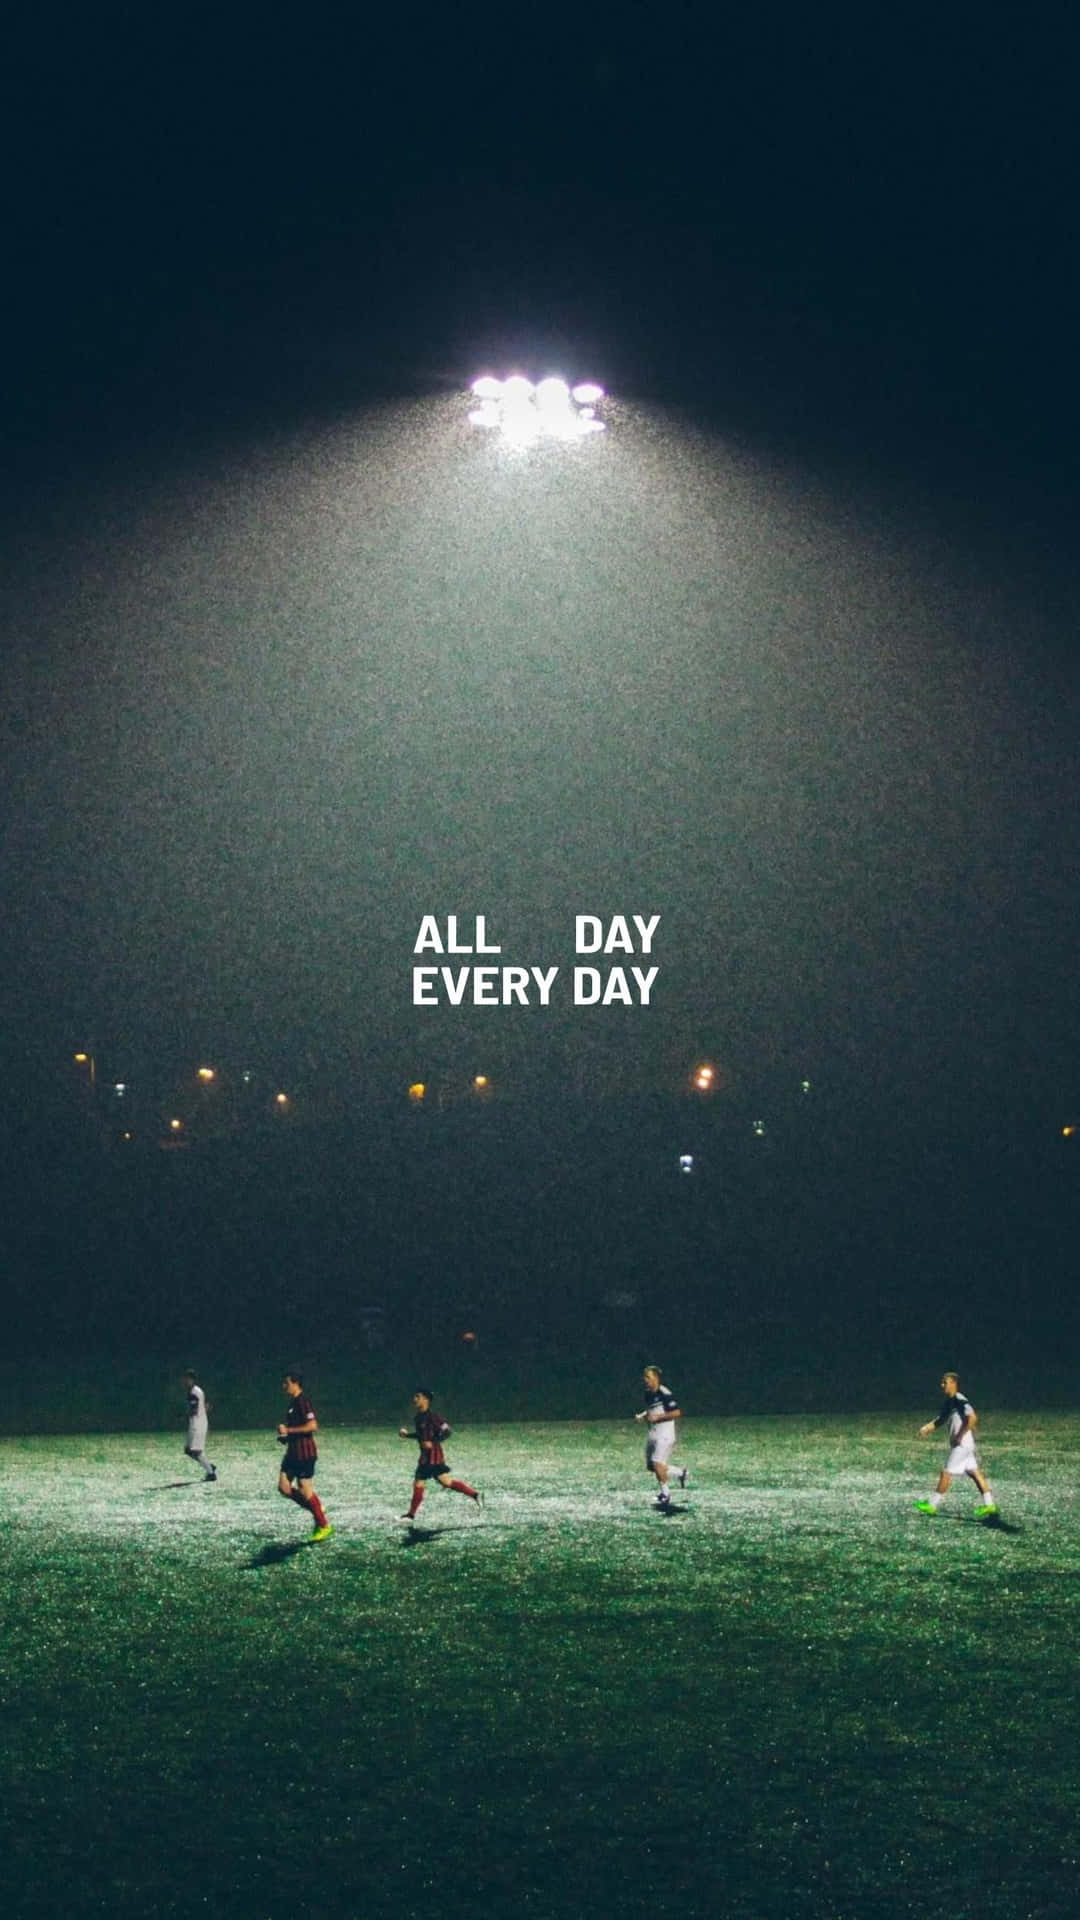 Nighttime Football Practice Motivation Wallpaper